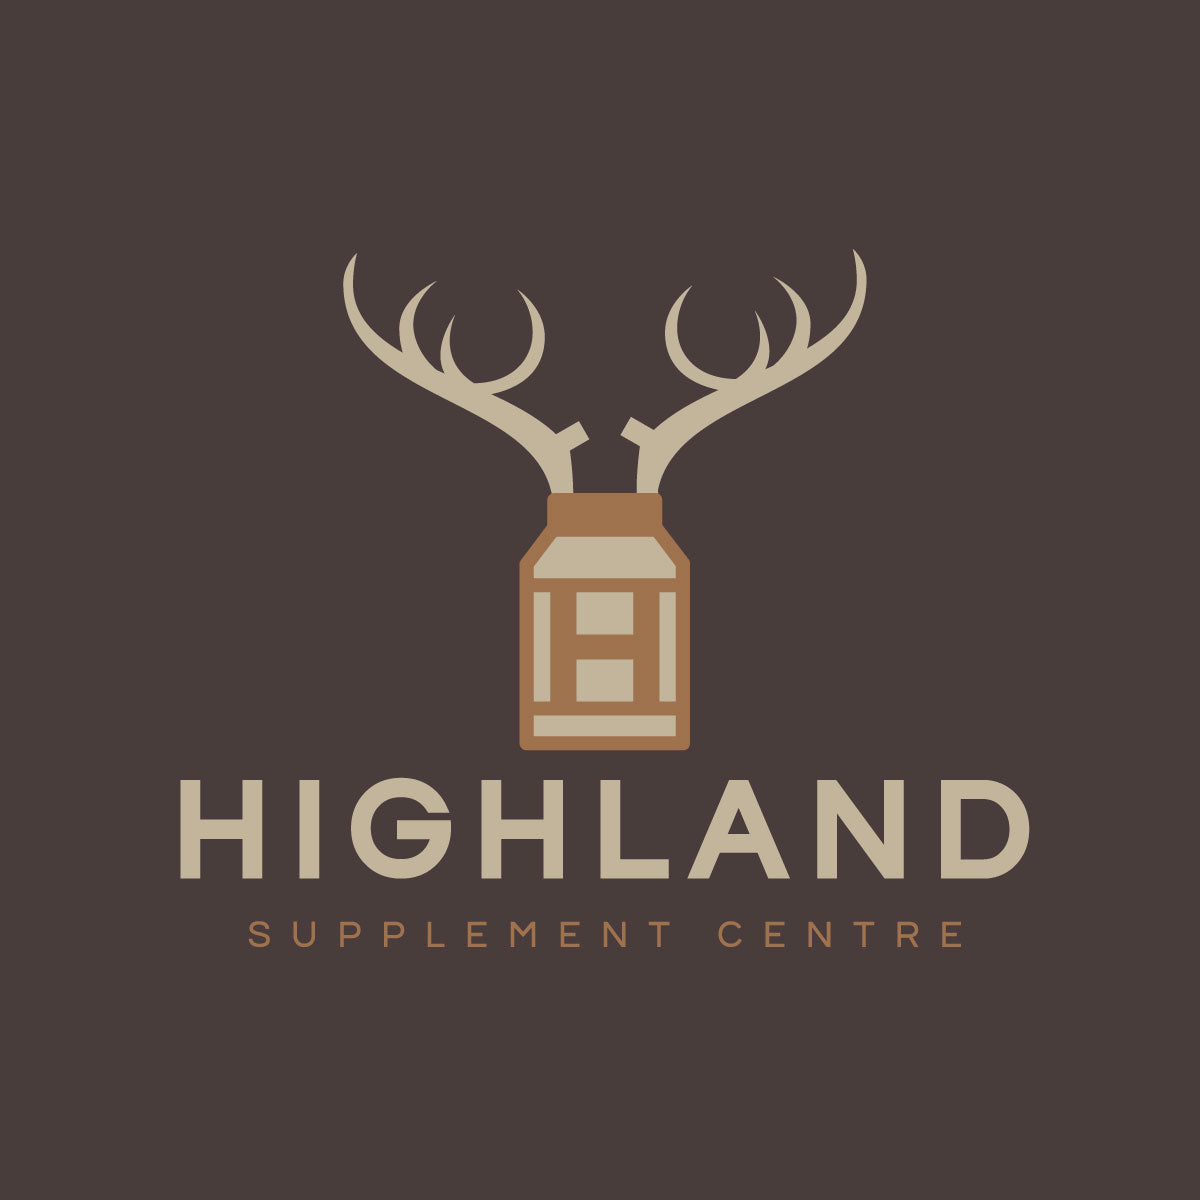 Highland Supplement Centre